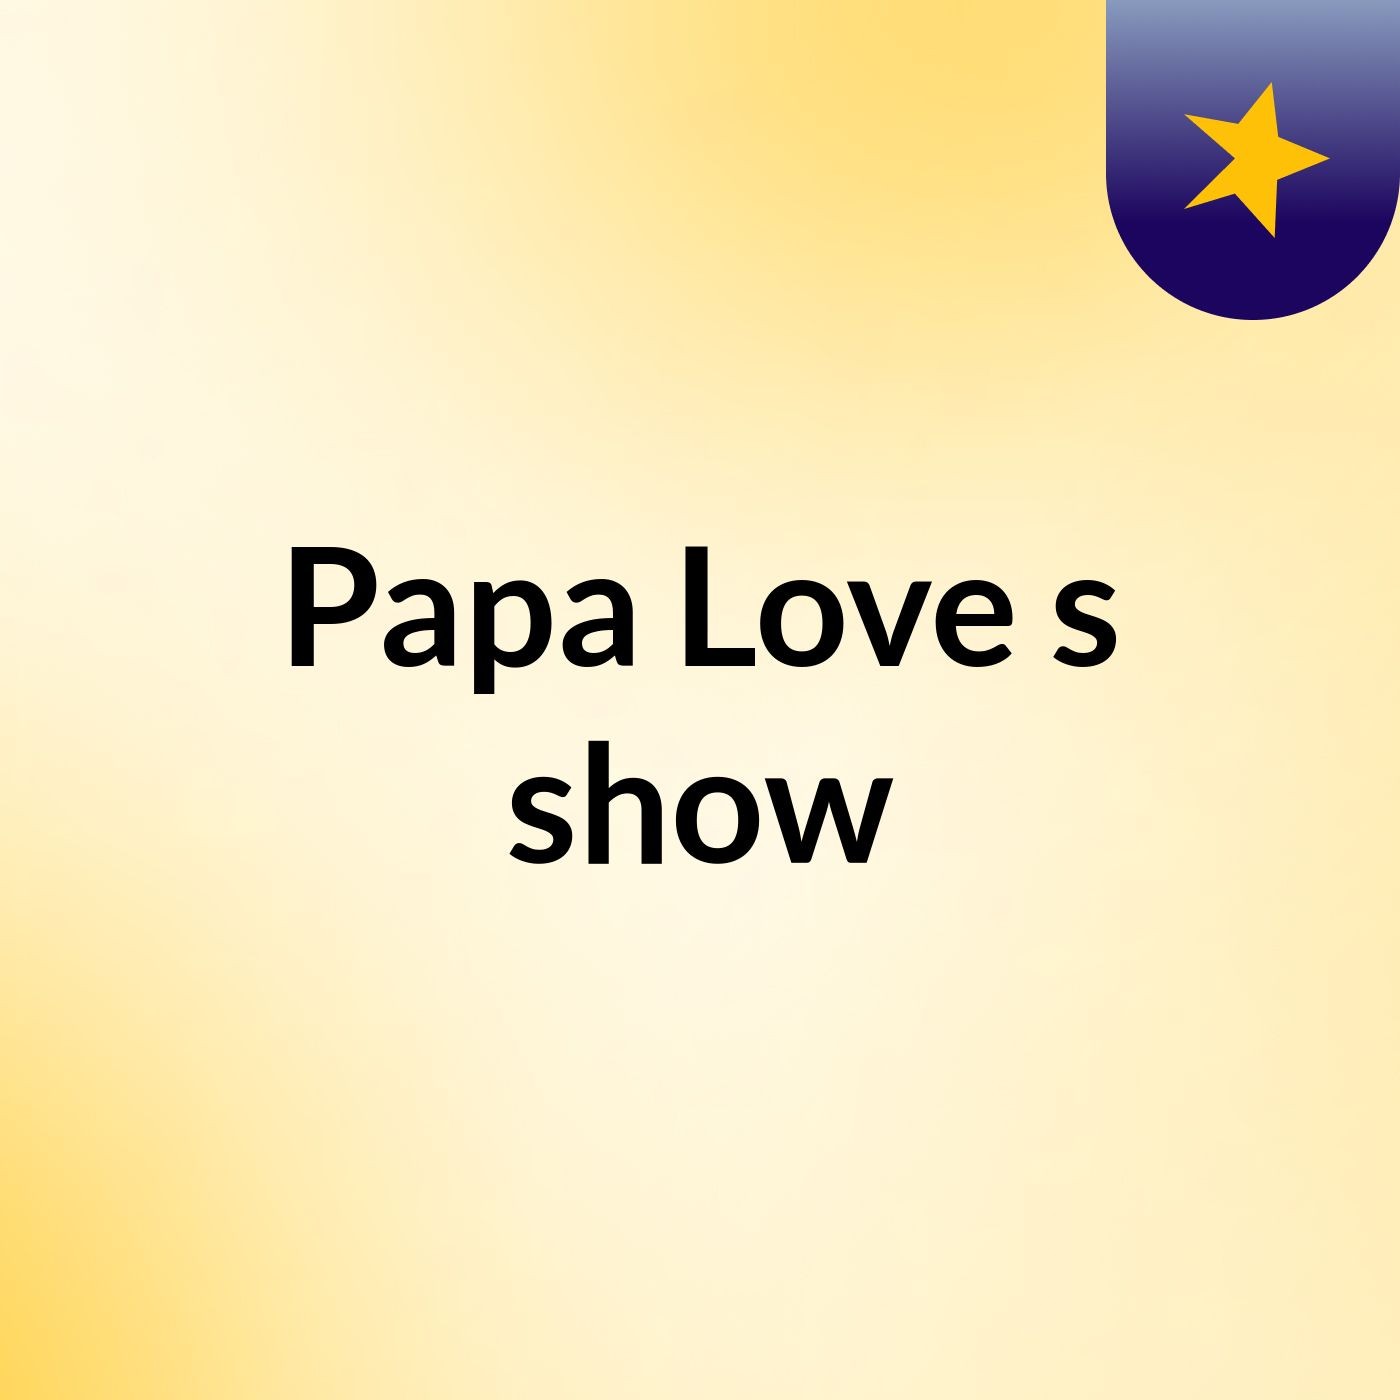 Papa Love's show